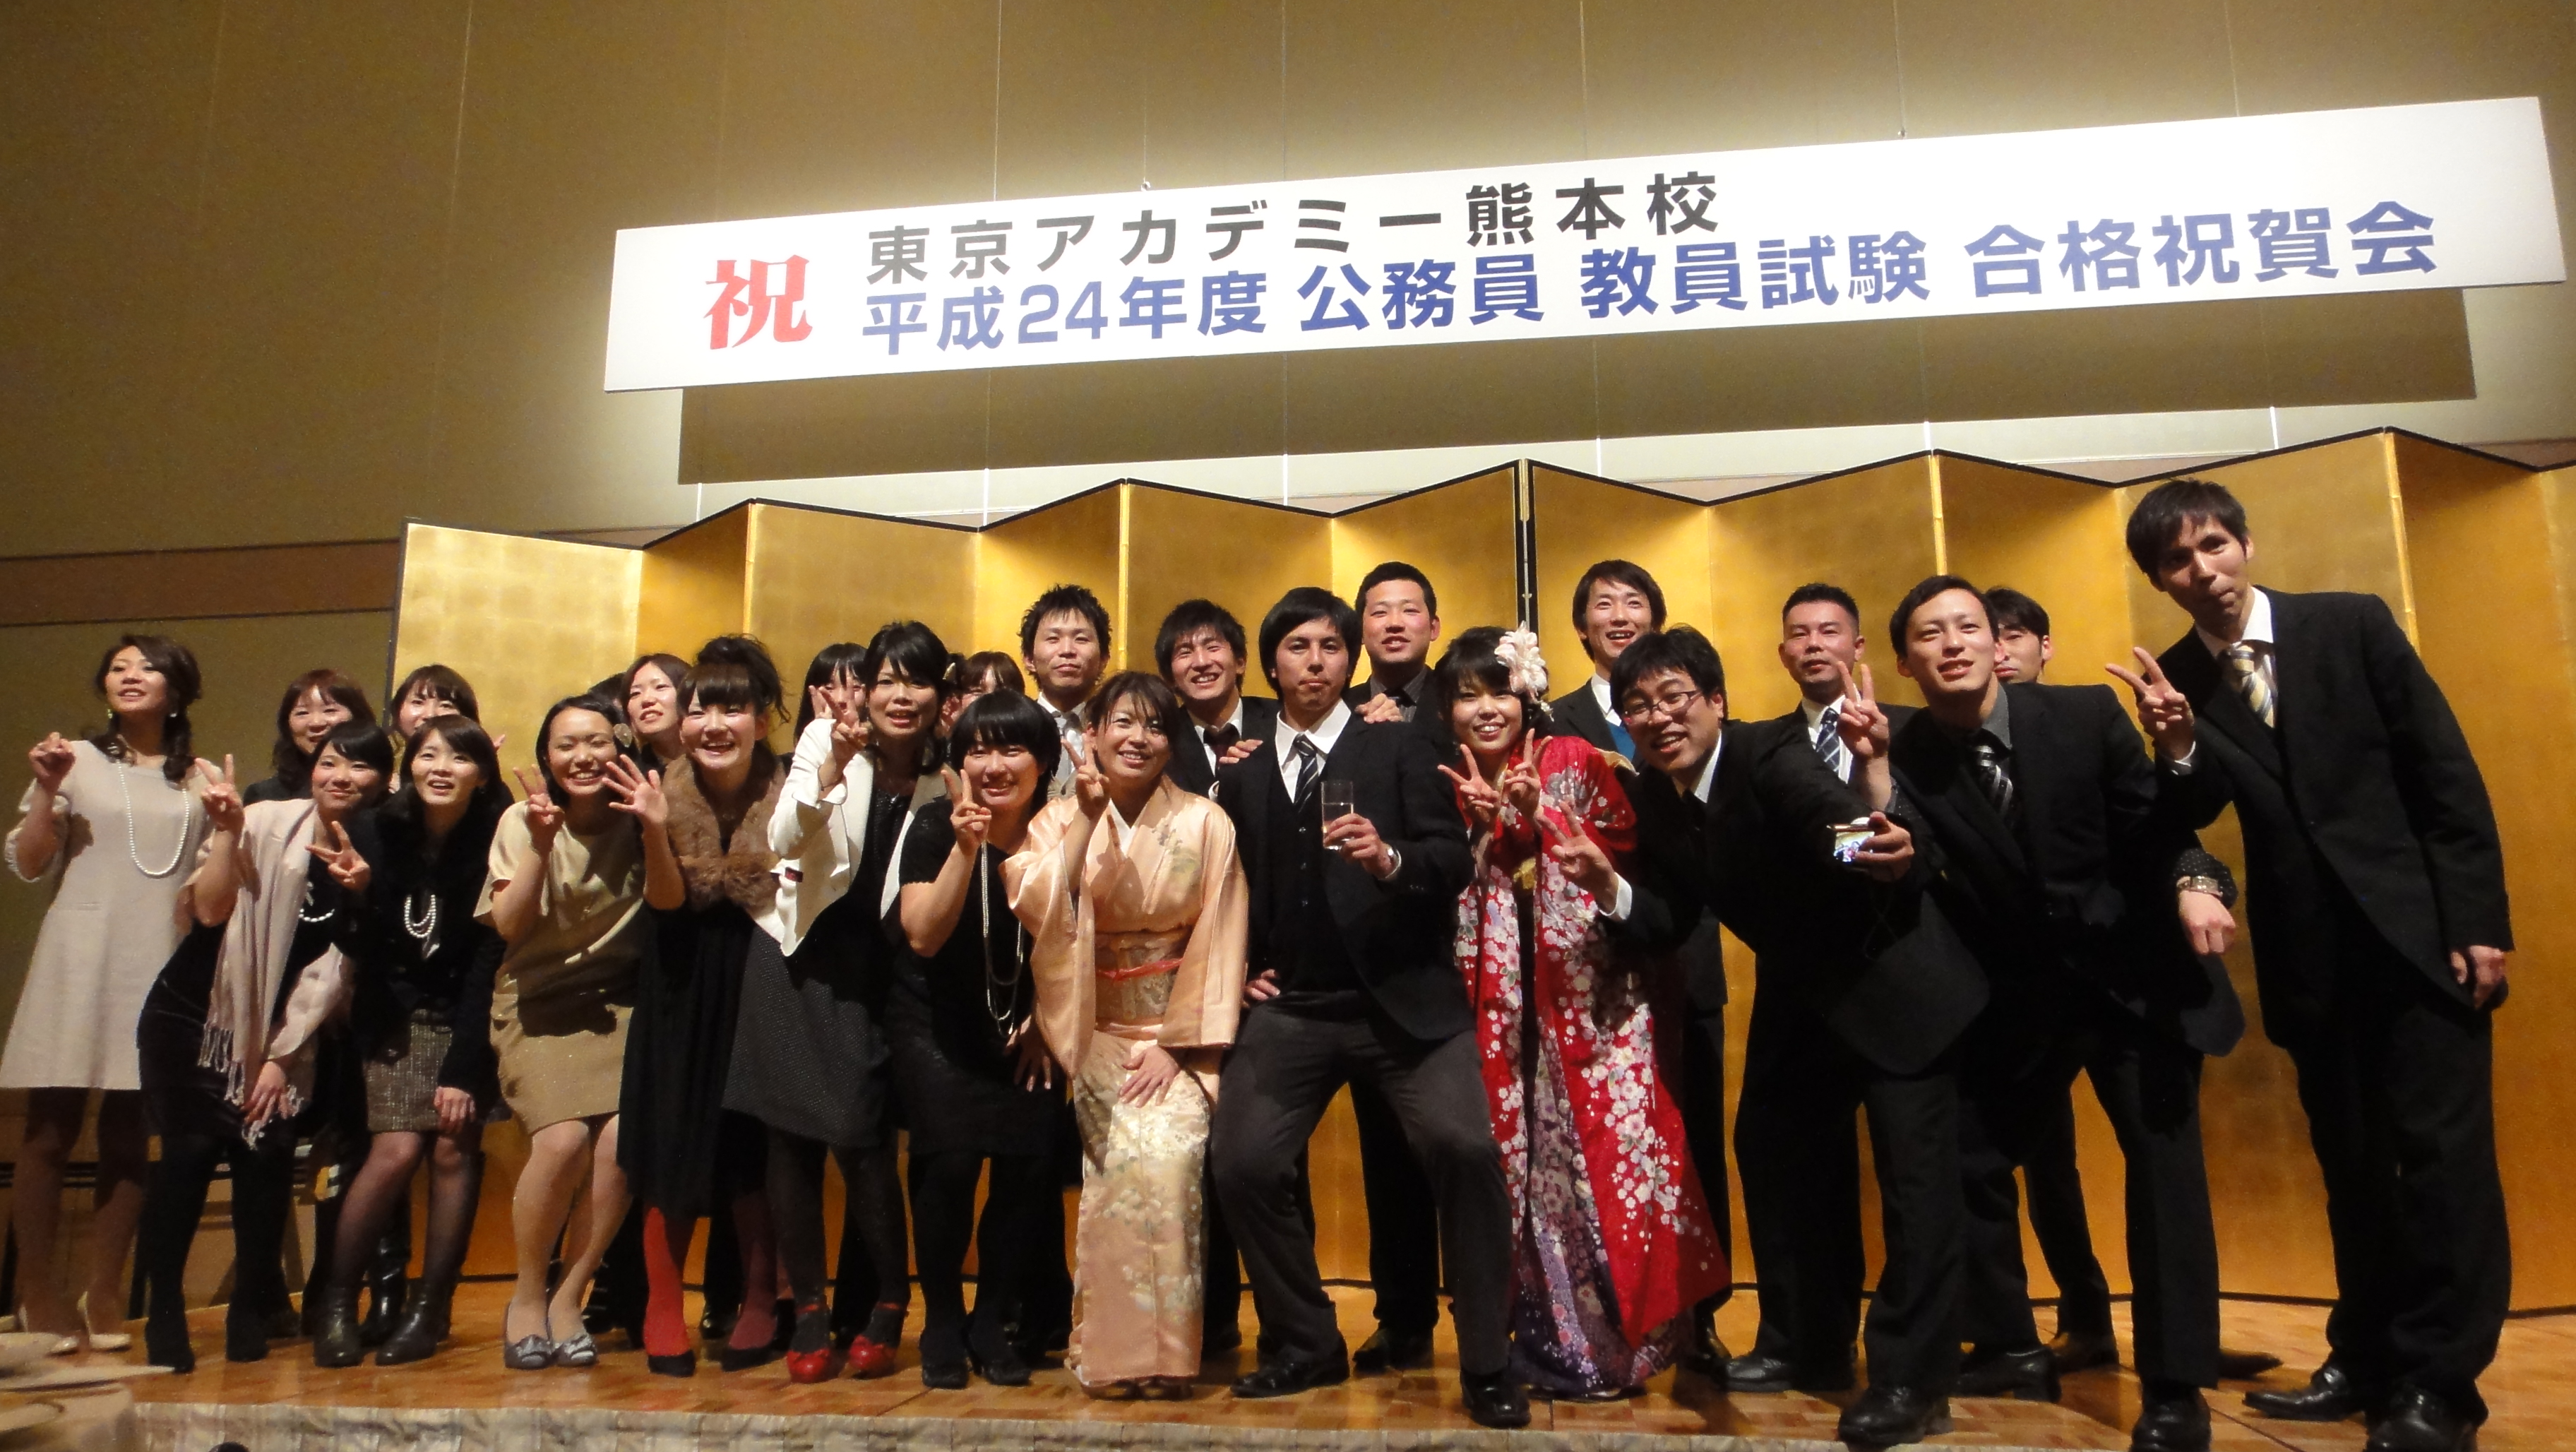 おめでとう おめでとう おめでとう 東京アカデミー熊本校 教員採用試験 看護師国家試験 公務員試験 のブログ